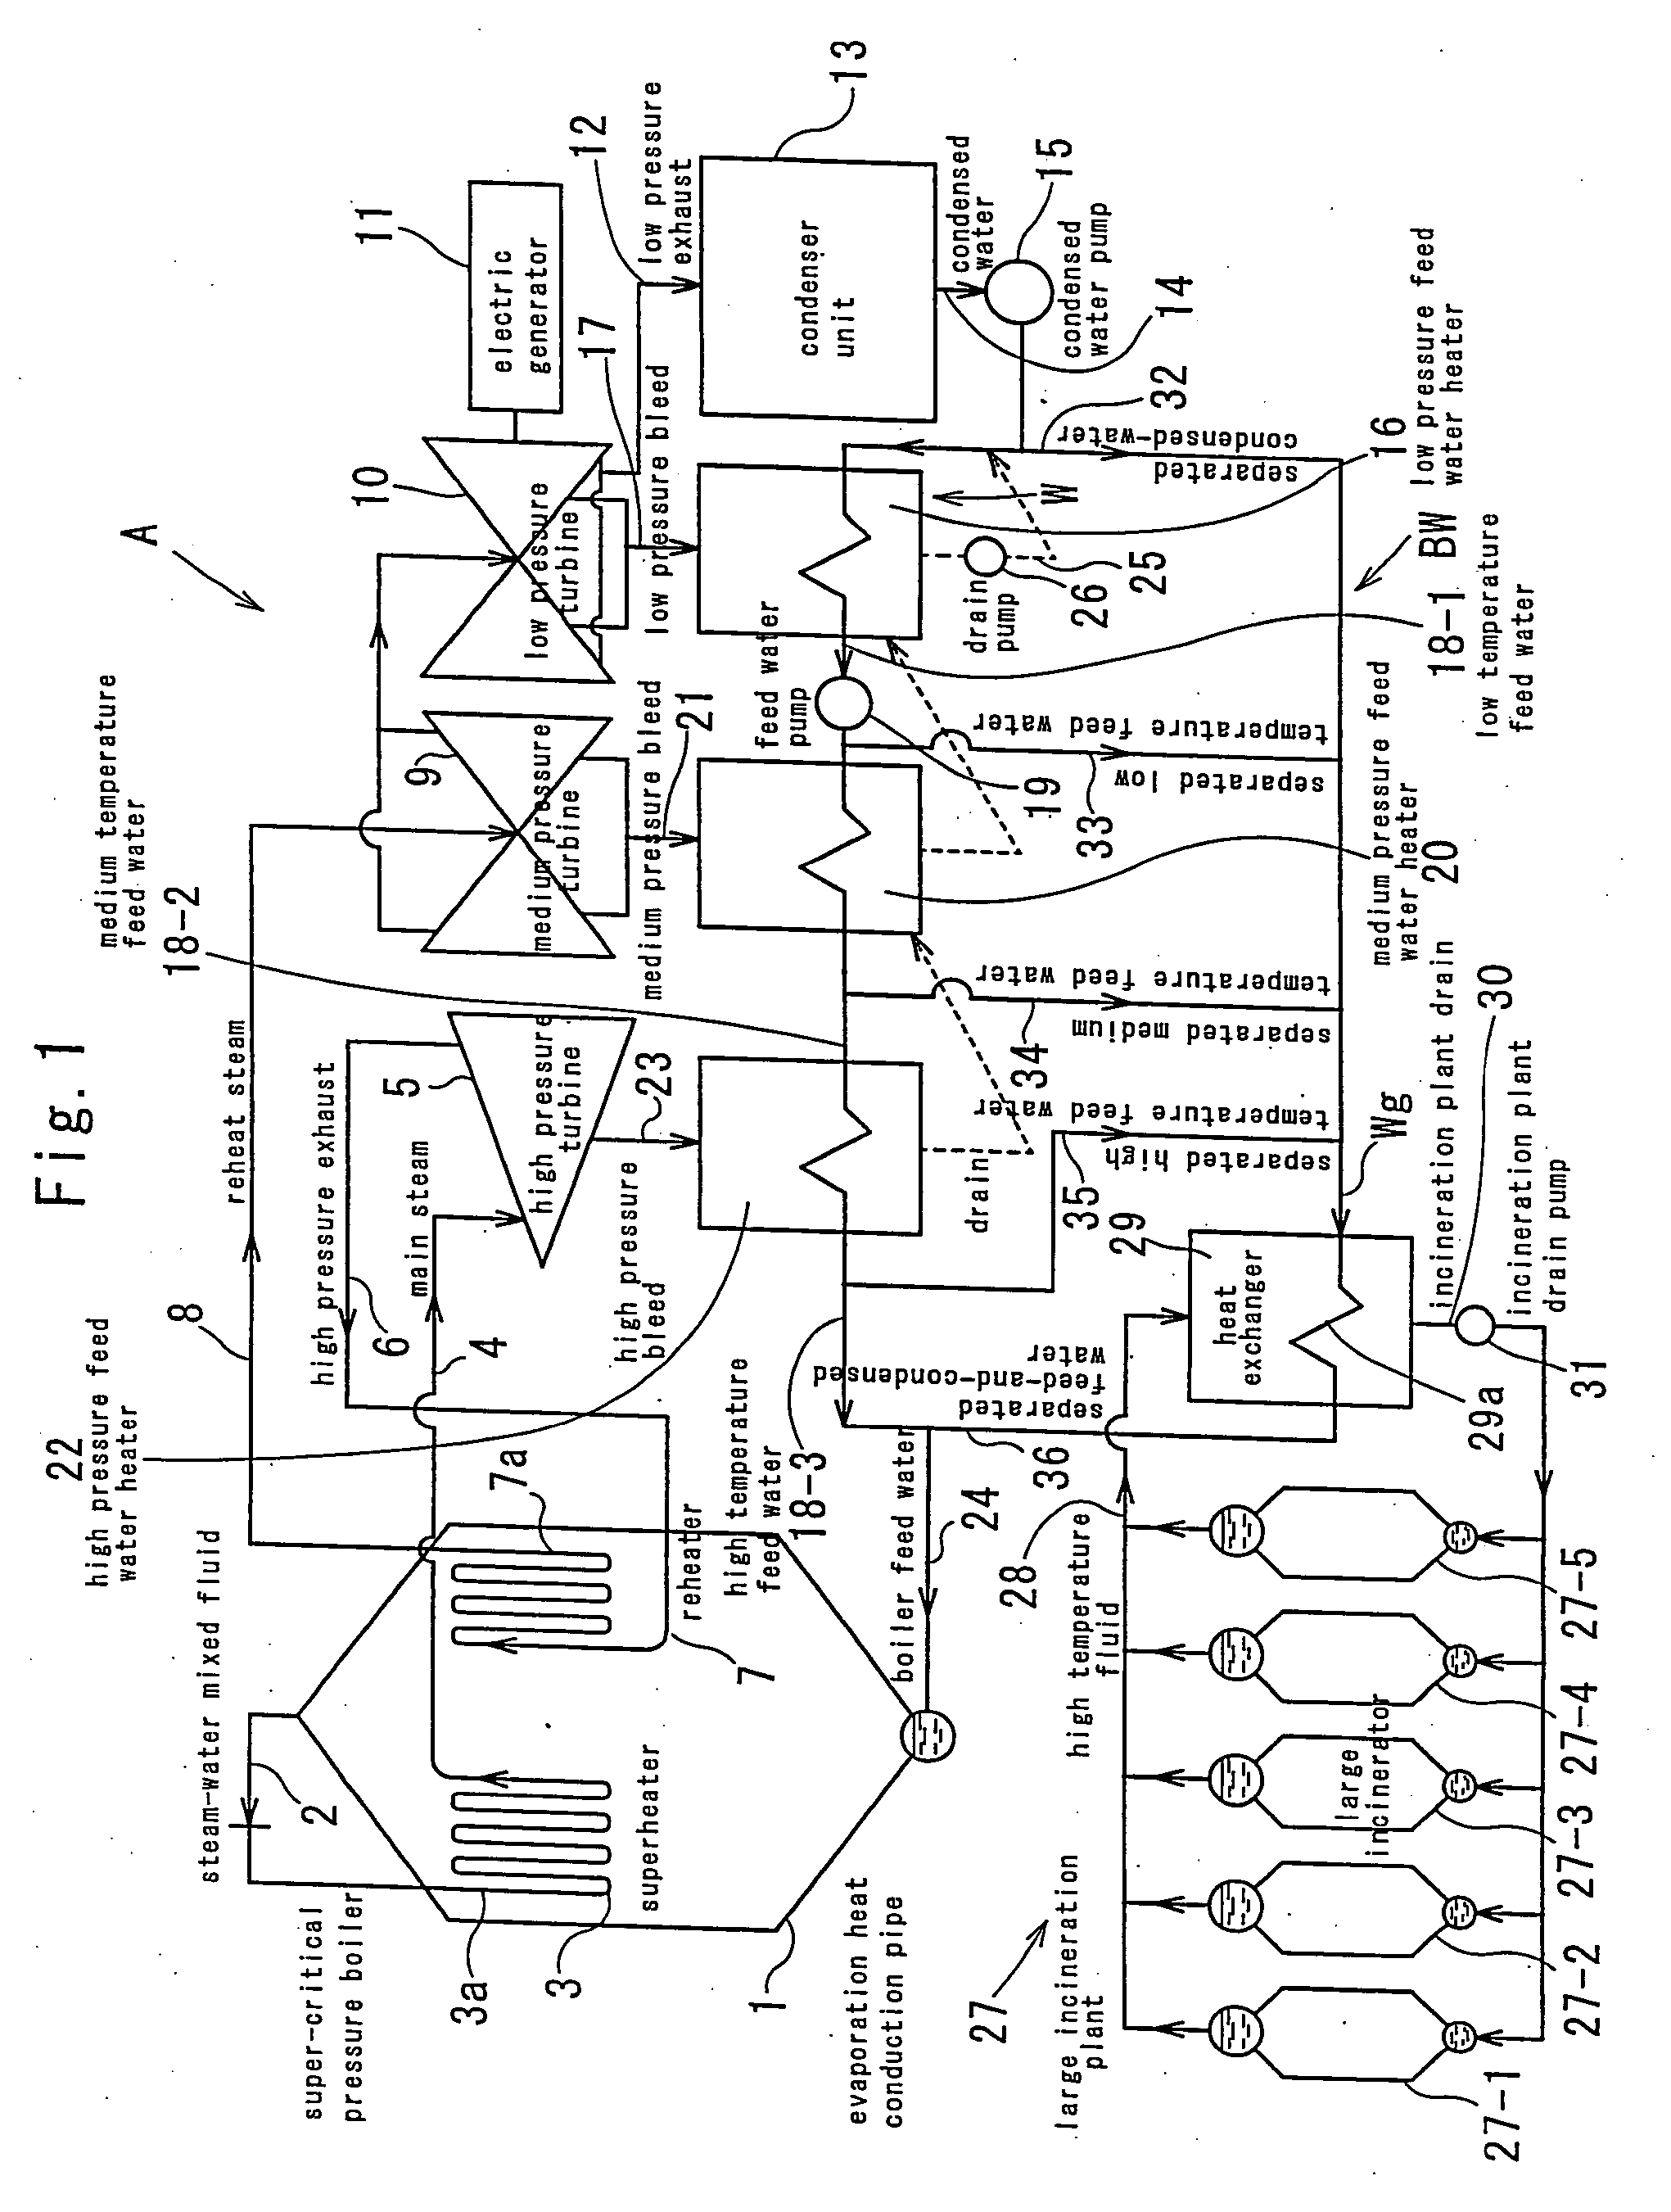 Reheat/regenerative type thermal power plant using rankine cycle